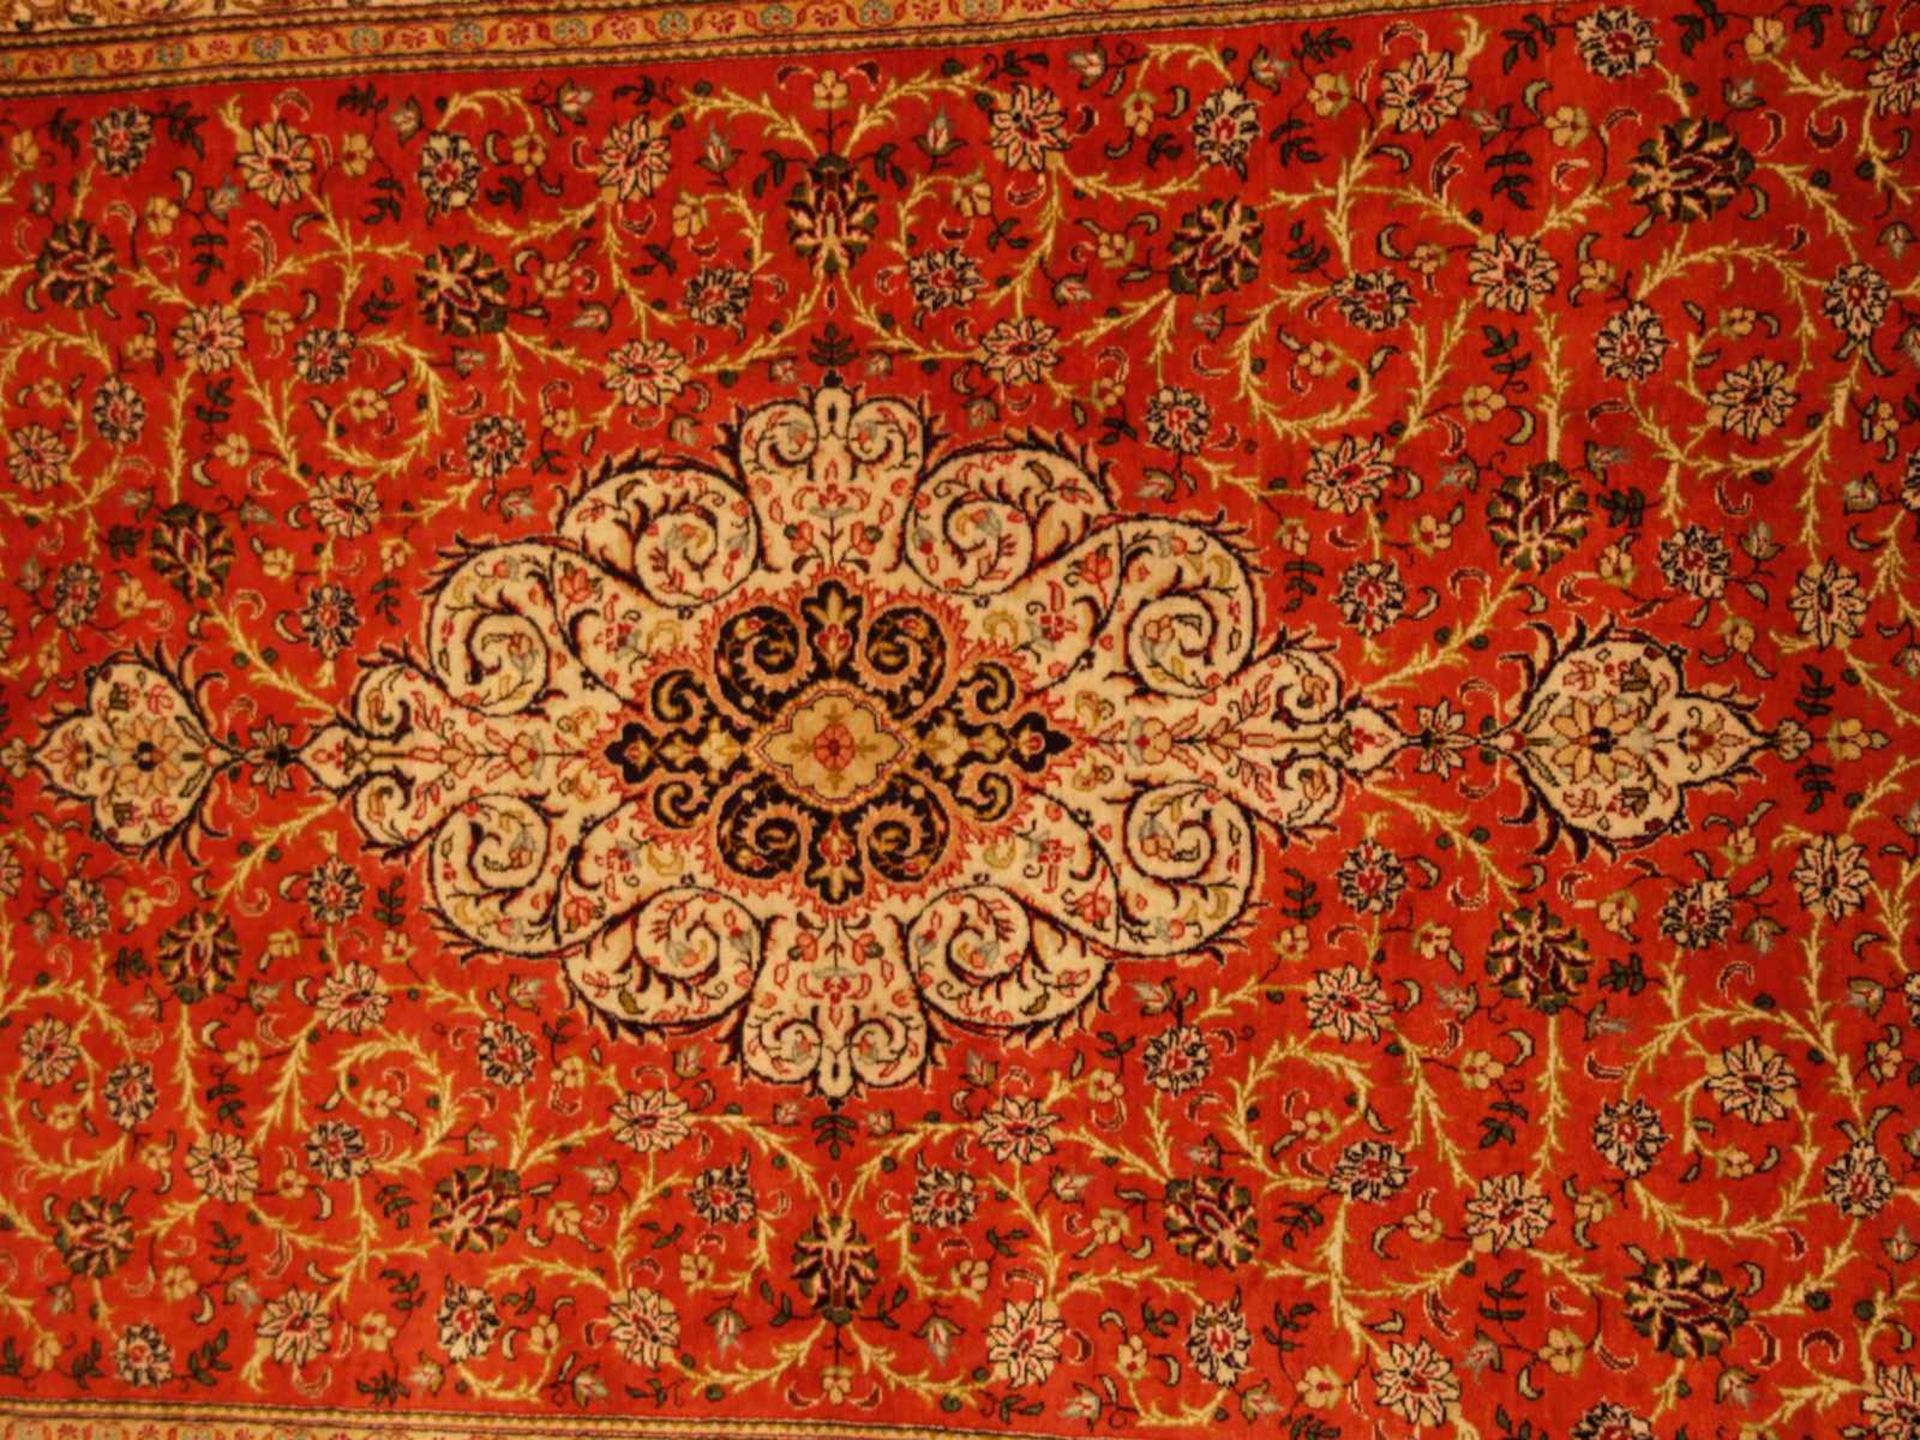 Ghom - Wolle,handgeknüpft,florales Muster,rotgrundig,ca.160x90cm,Orig.Zerti fikat anbei Ghom - Wool, - Bild 2 aus 5